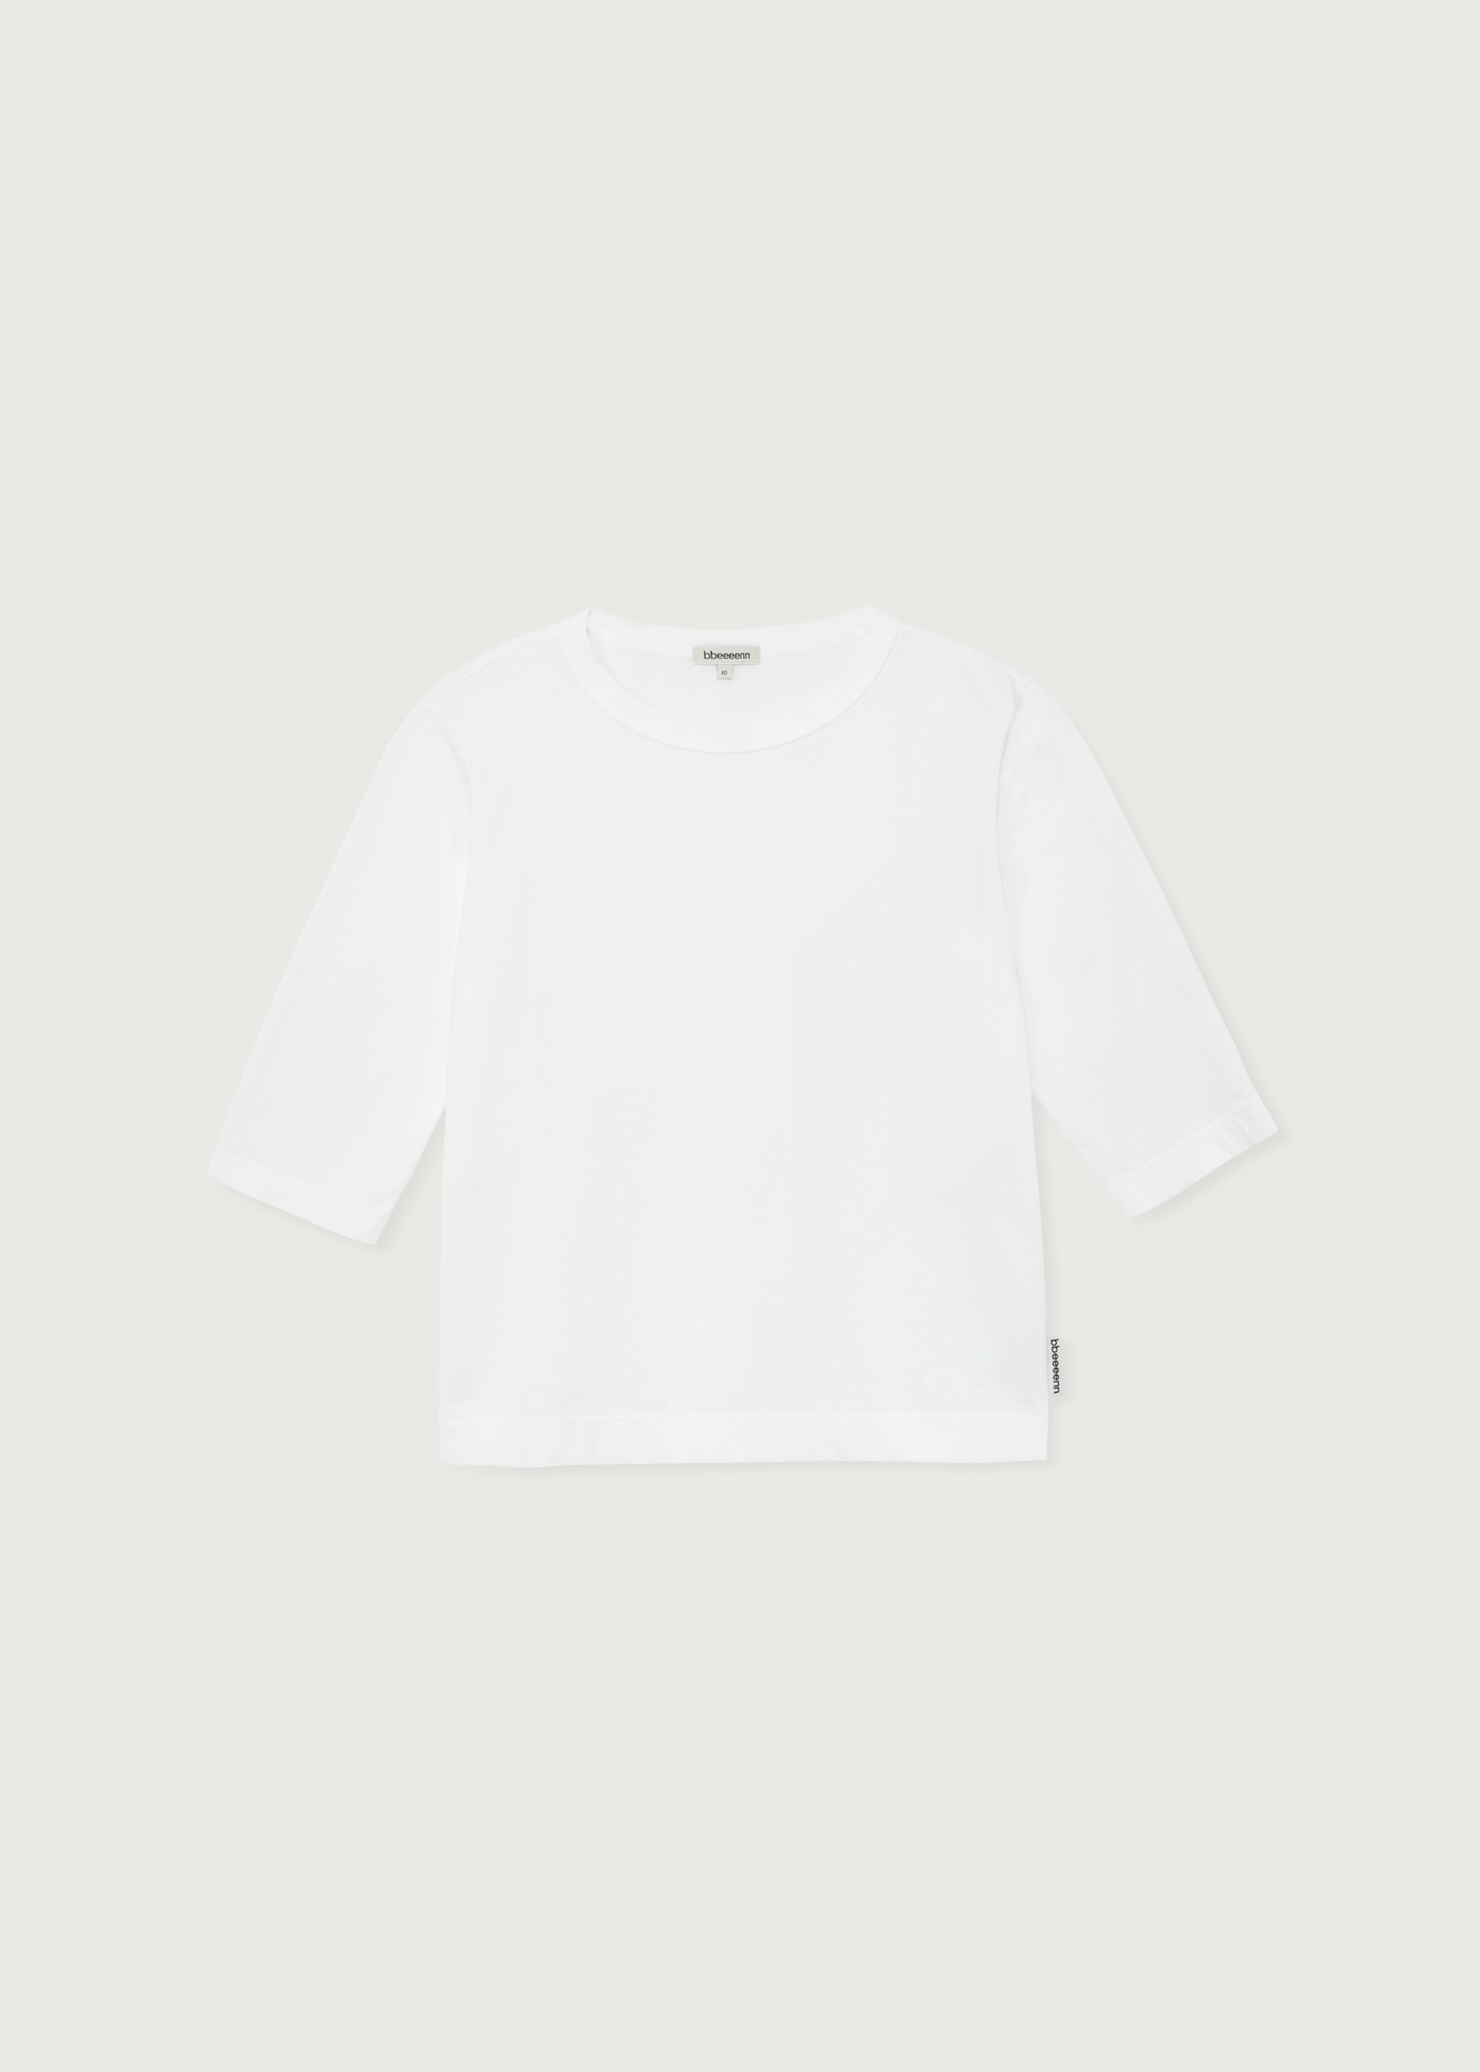 bbeeeenn 3/4 Sleeve T-shirt_Ivory